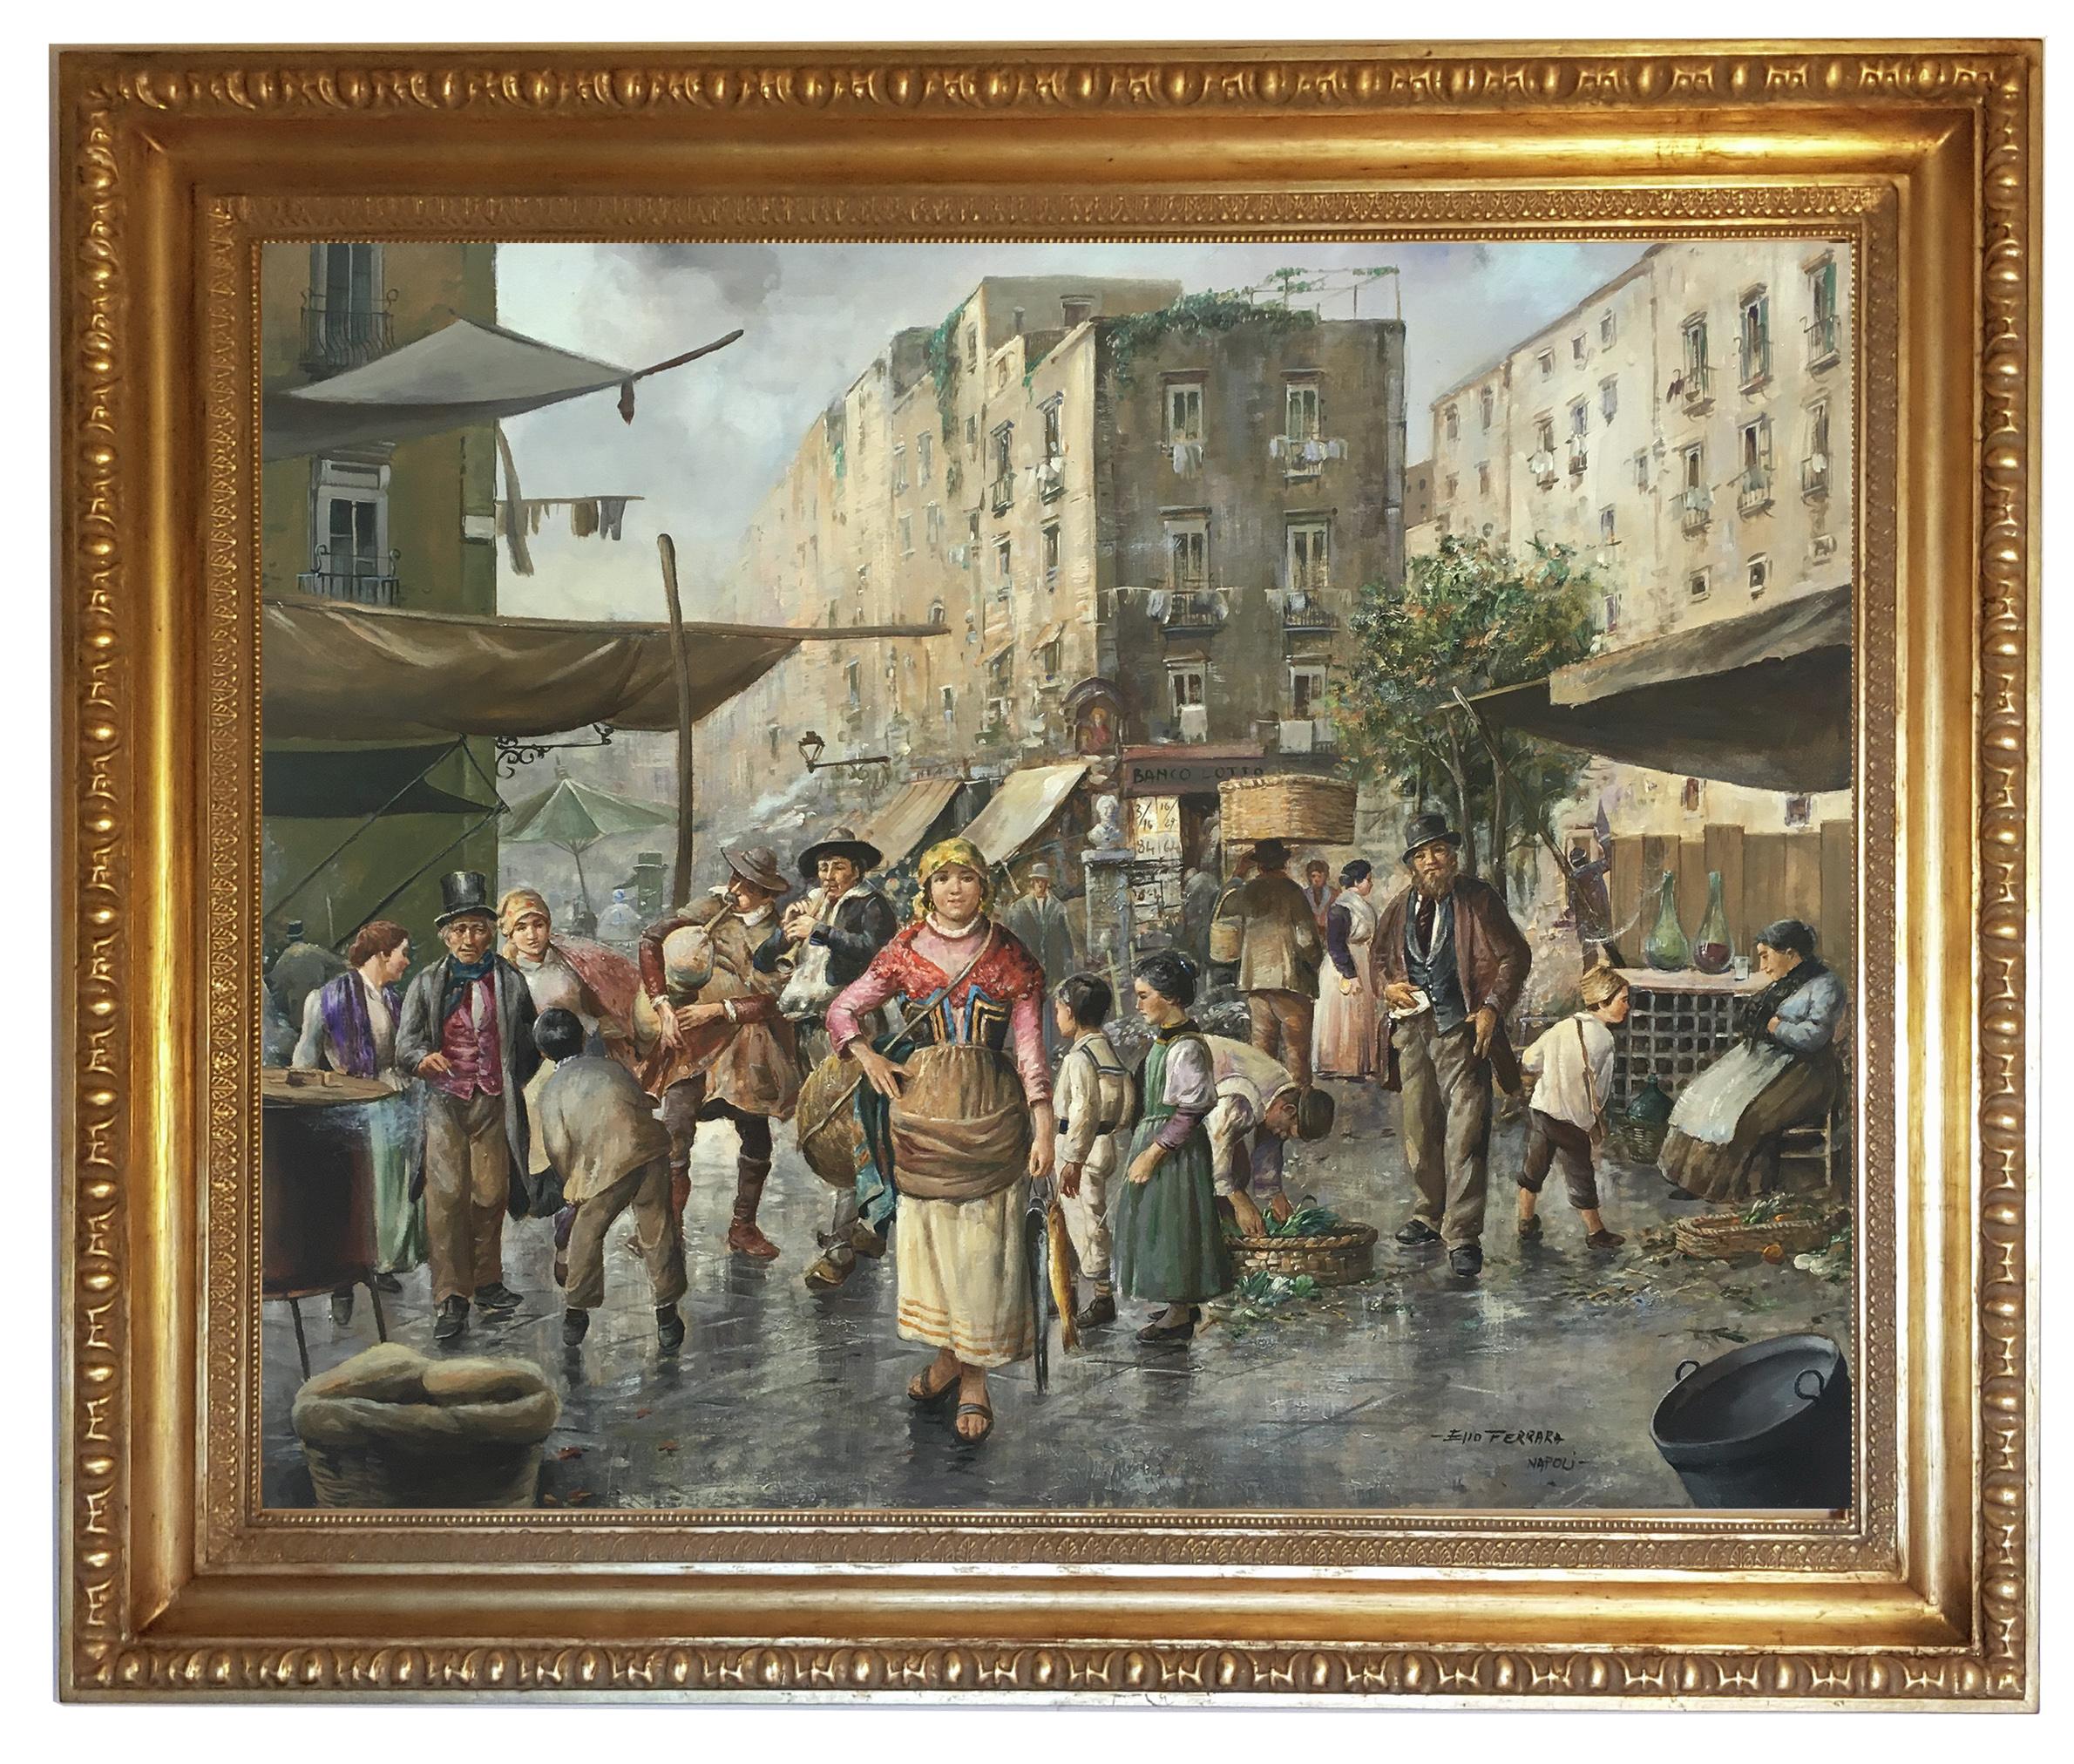 LA VIGILIA DI NATALE - Elio Ferrara Italienisches figuratives Gemälde in Öl auf Leinwand